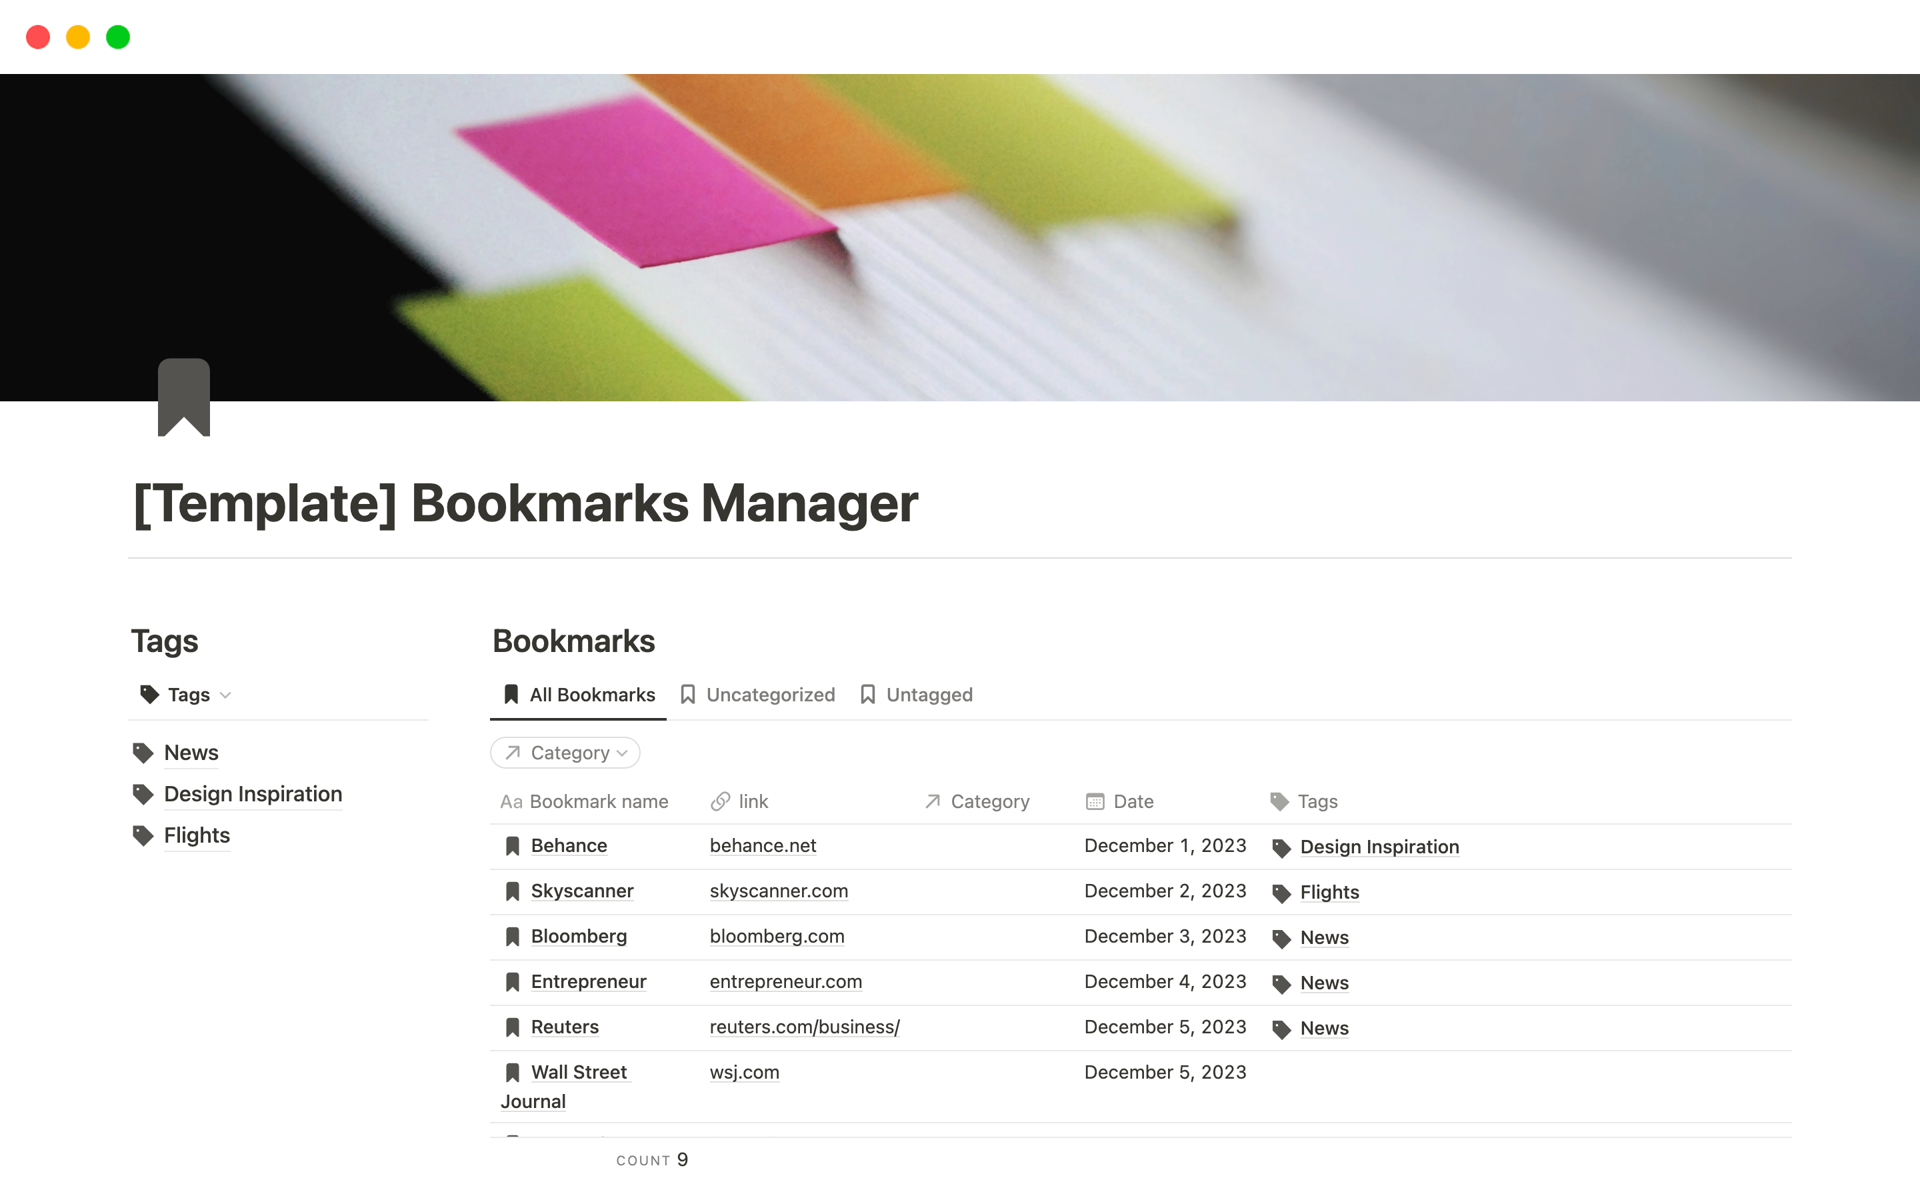 Vista previa de una plantilla para Bookmarks Manager